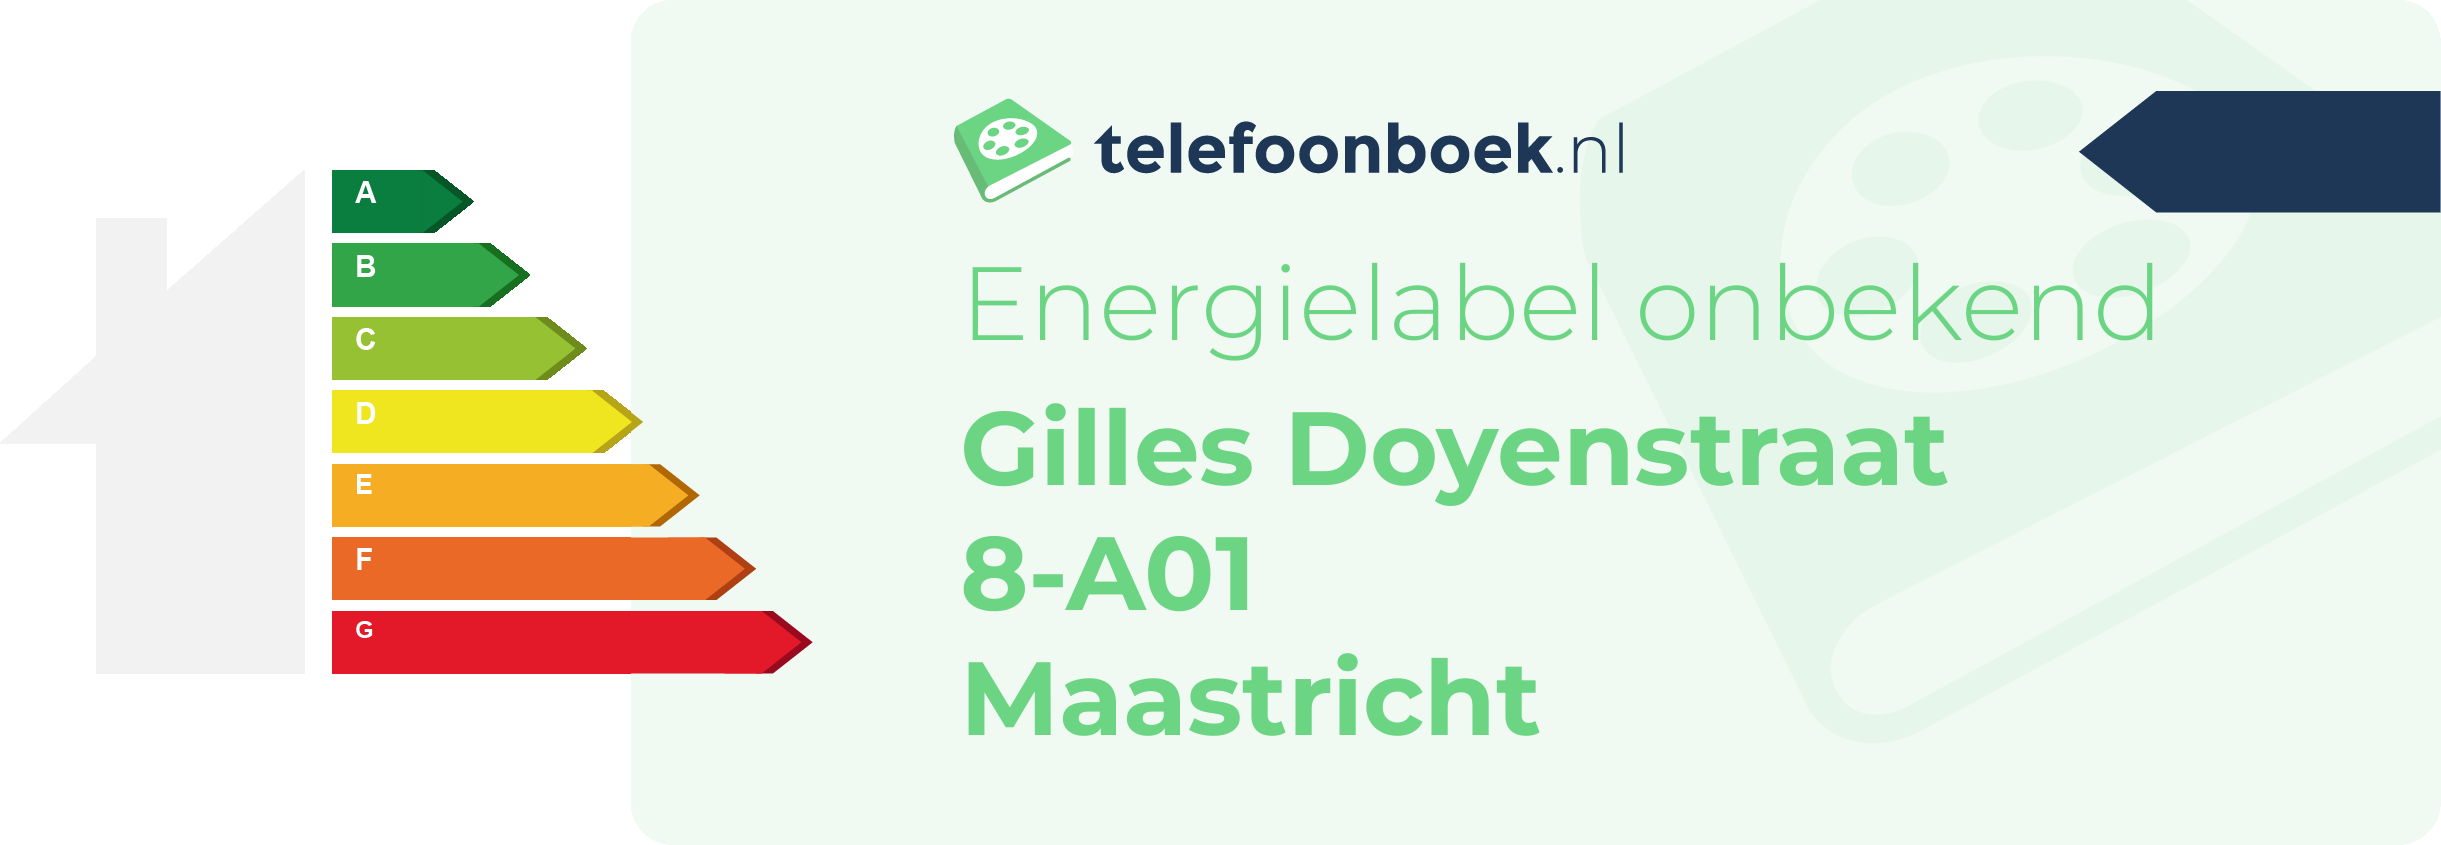 Energielabel Gilles Doyenstraat 8-A01 Maastricht